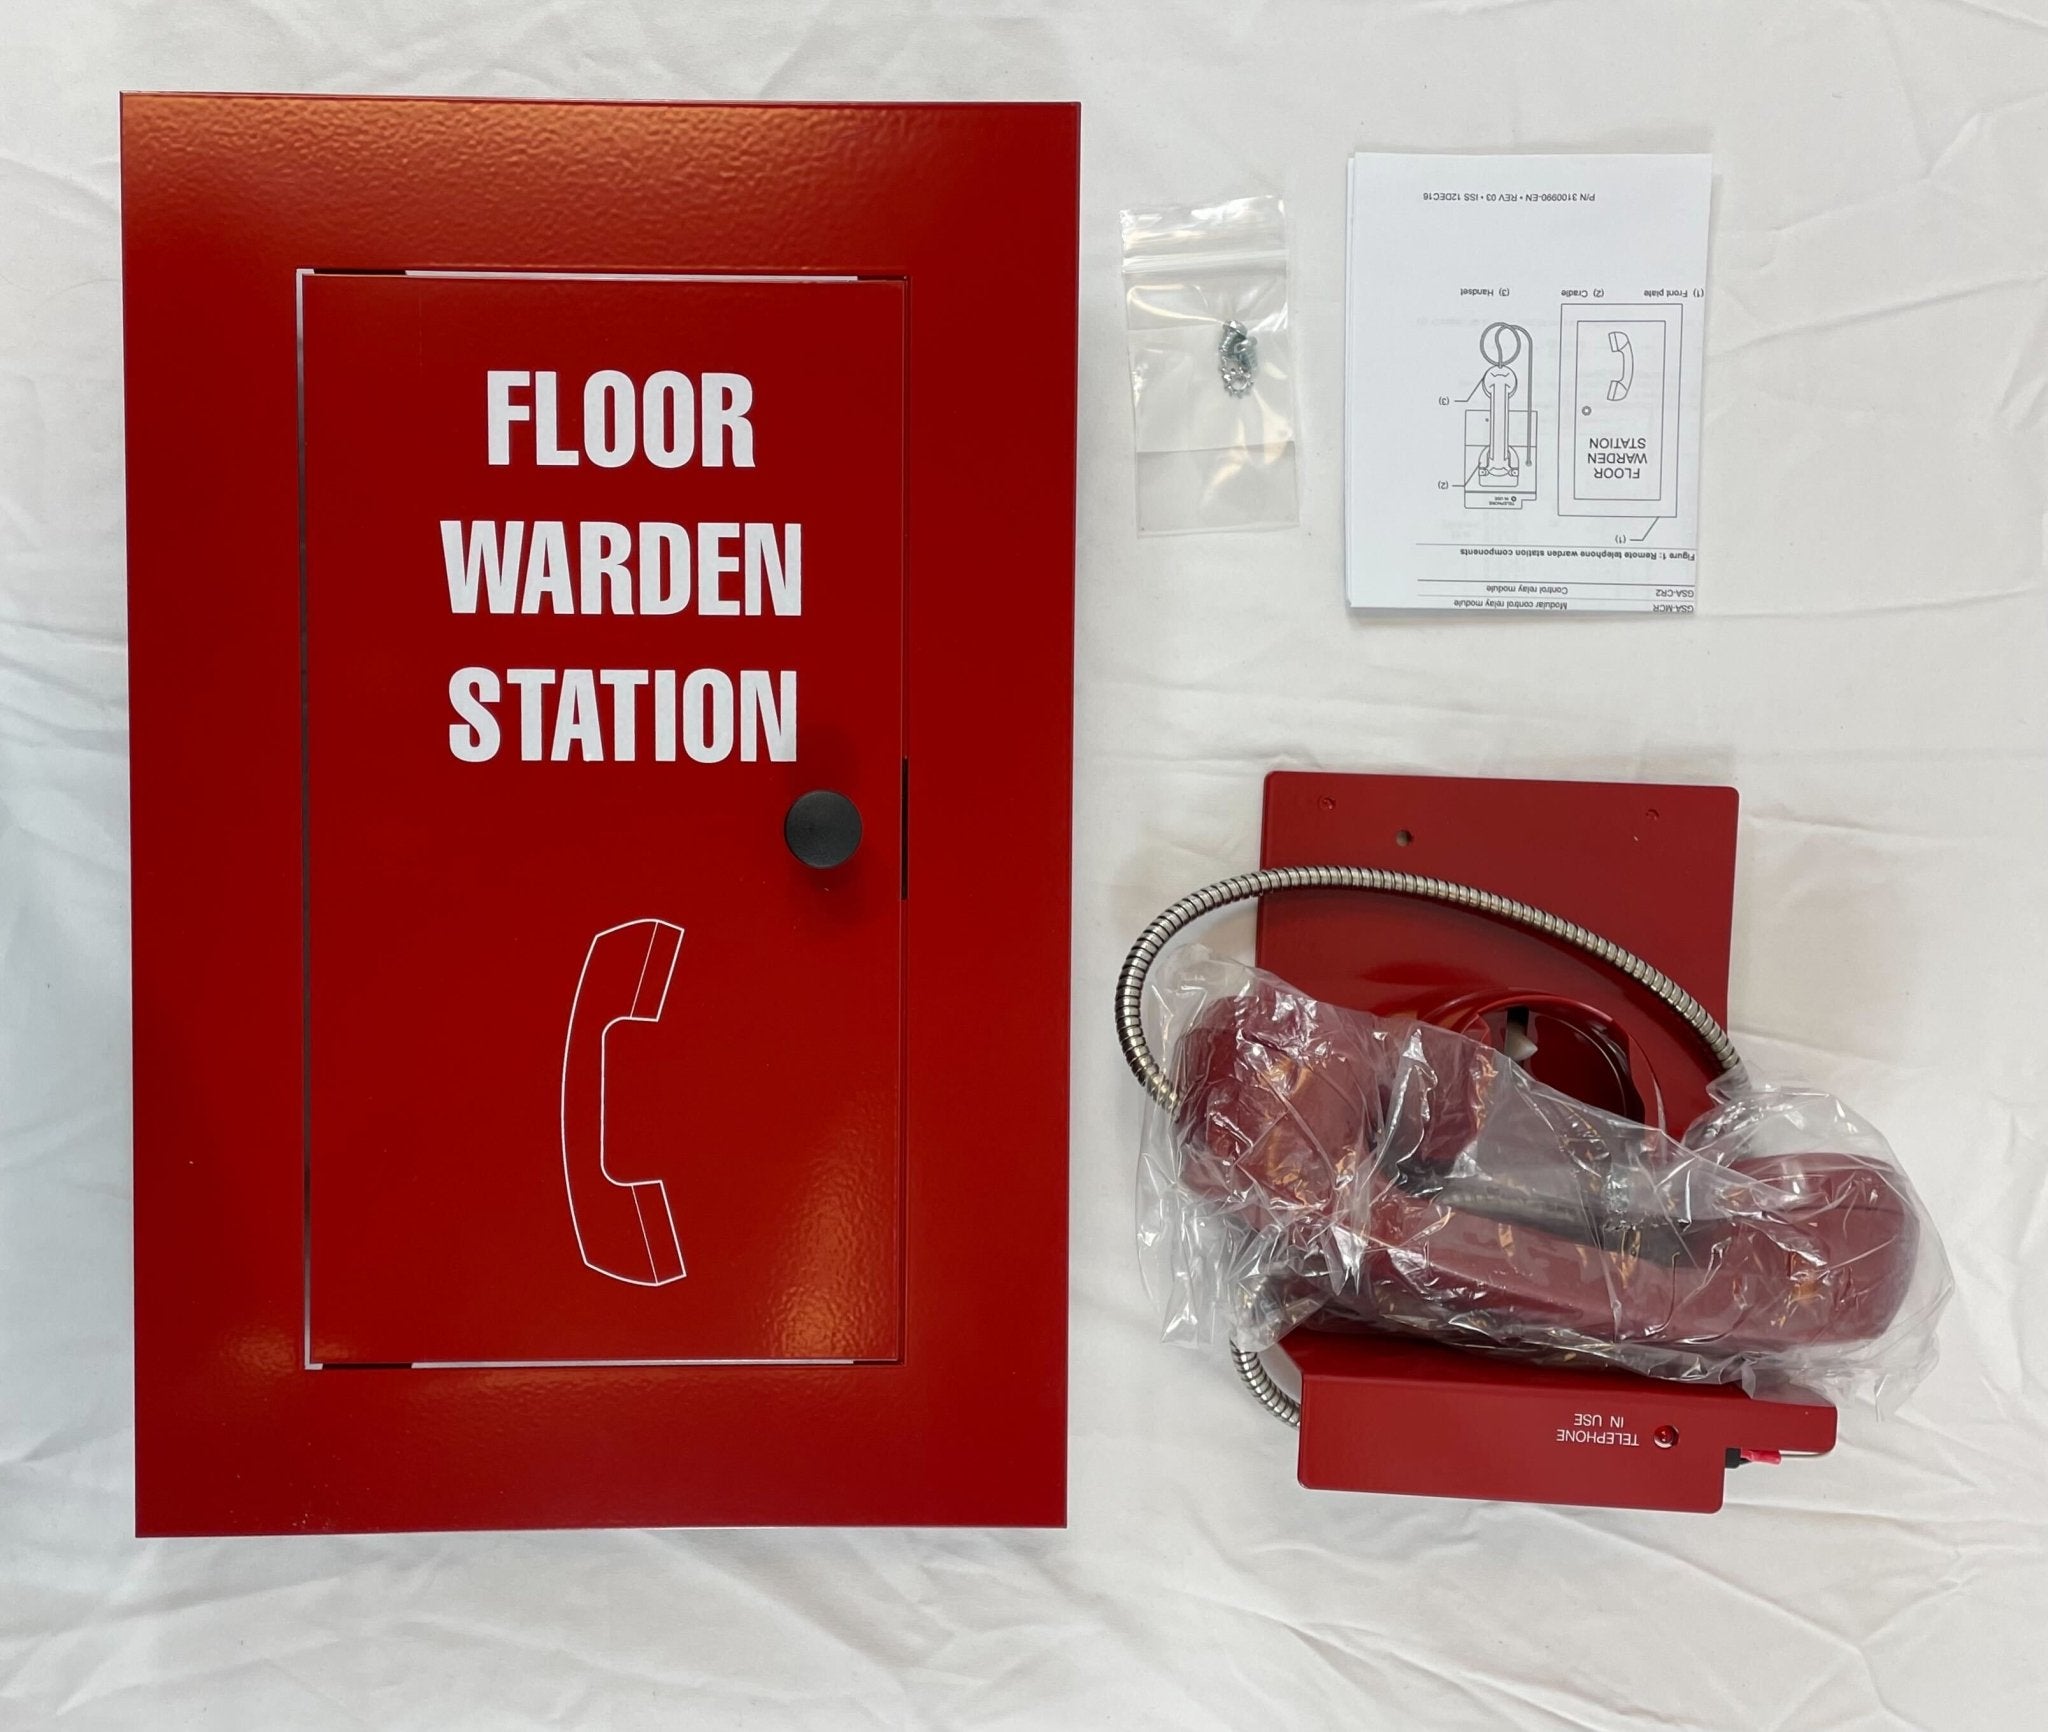 Edwards 6830-NY-F4 - The Fire Alarm Supplier